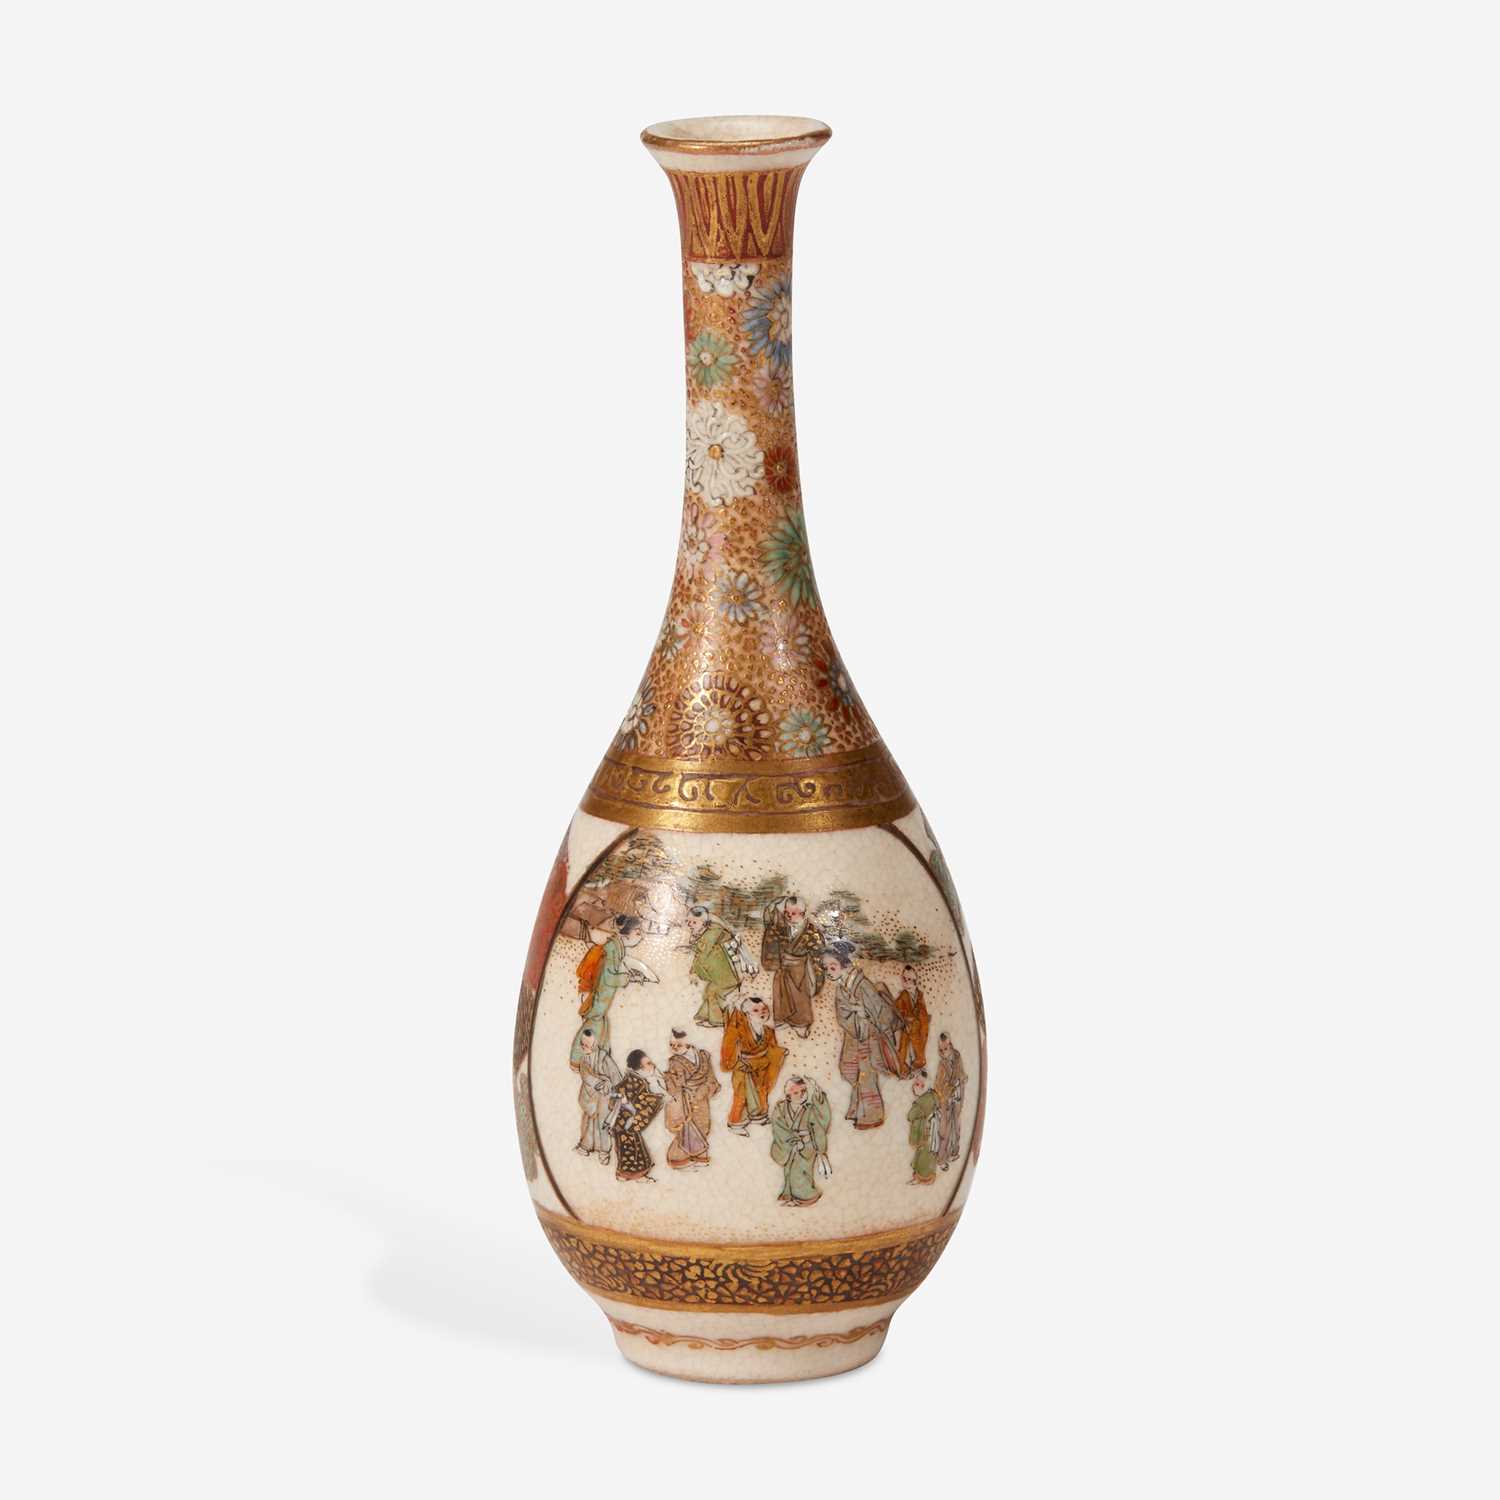 Lot 231 - A small Japanese enameled Satsuma-type pottery cabinet vase